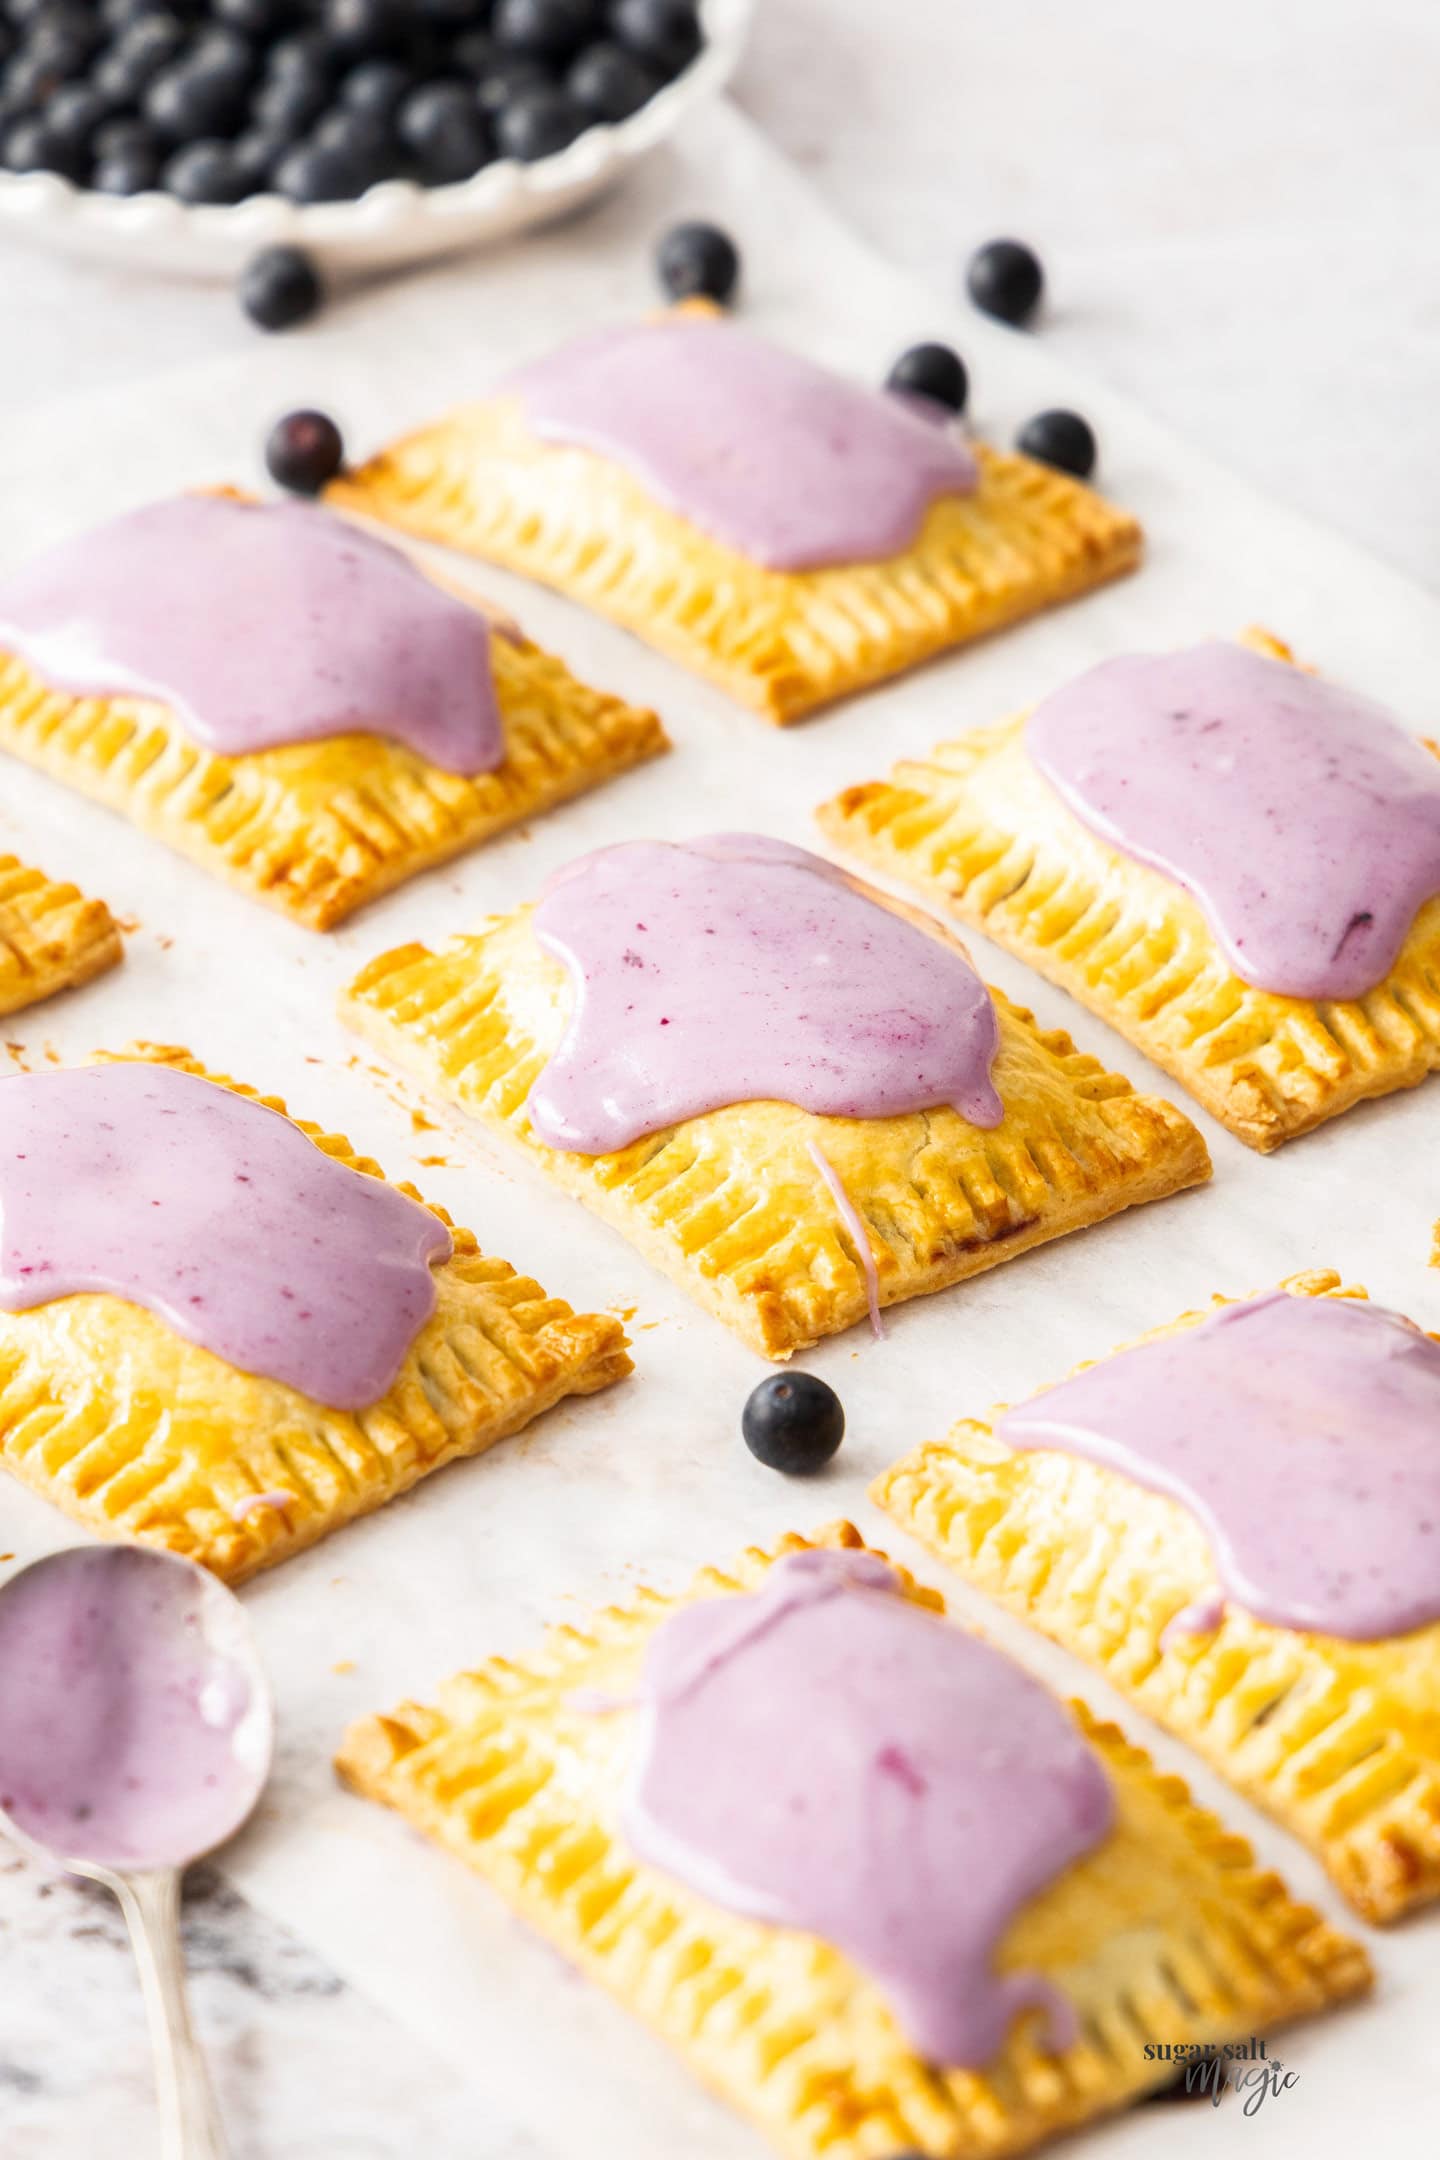 A batch of blueberry pop tarts on a sheet of baking paper.